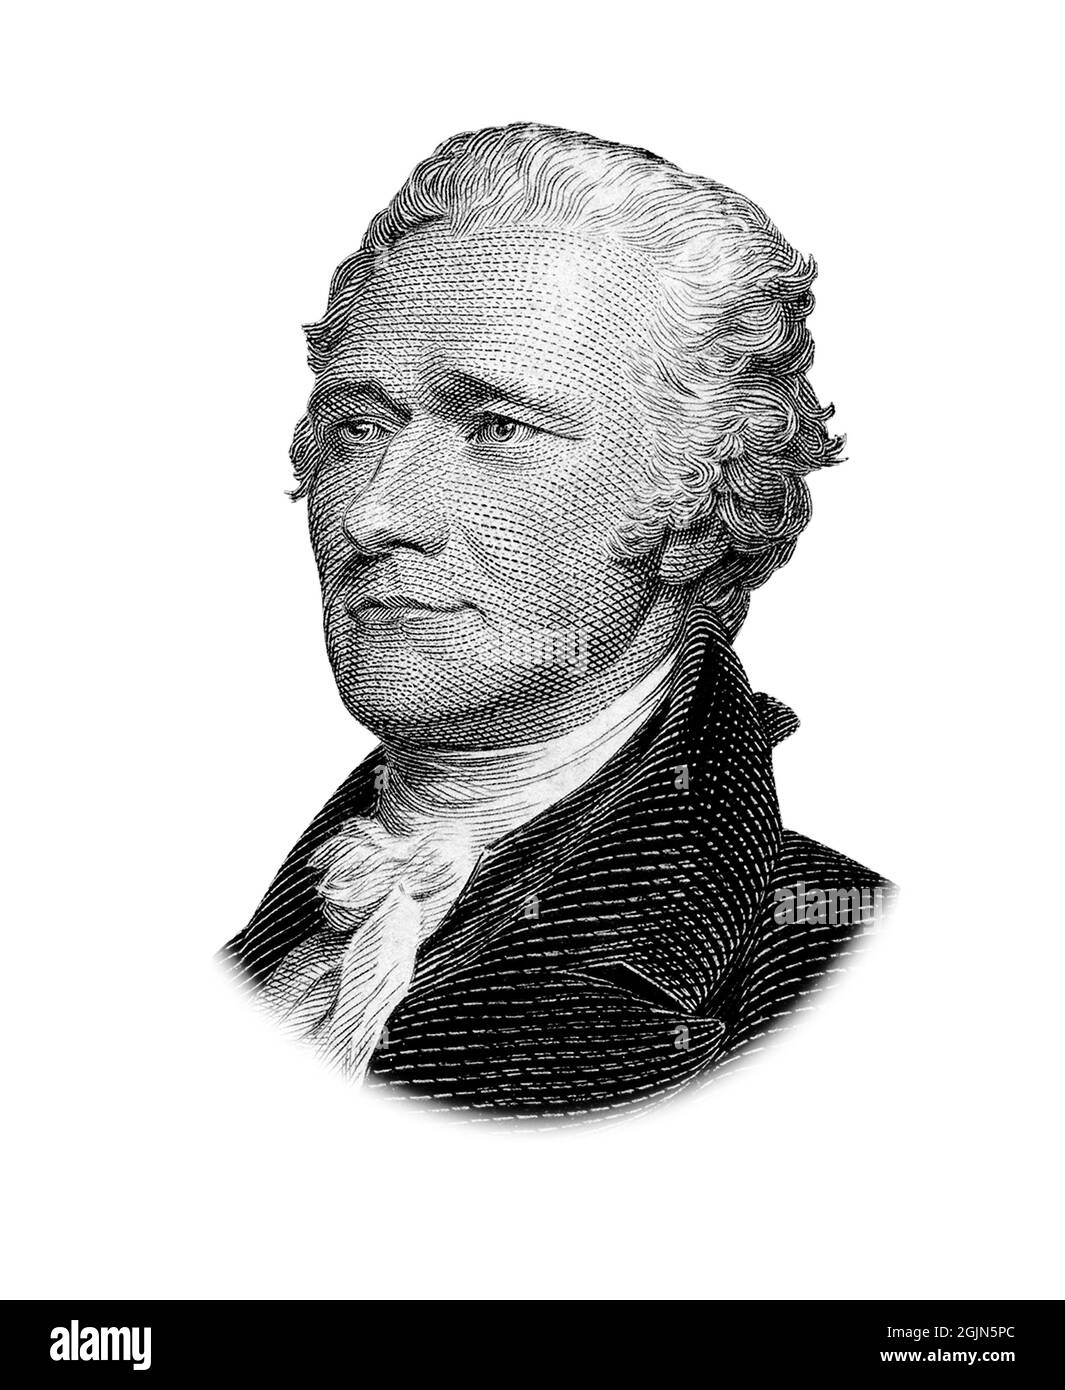 Portrait of Alexander Hamilton Isolated on White Background Stock Photo